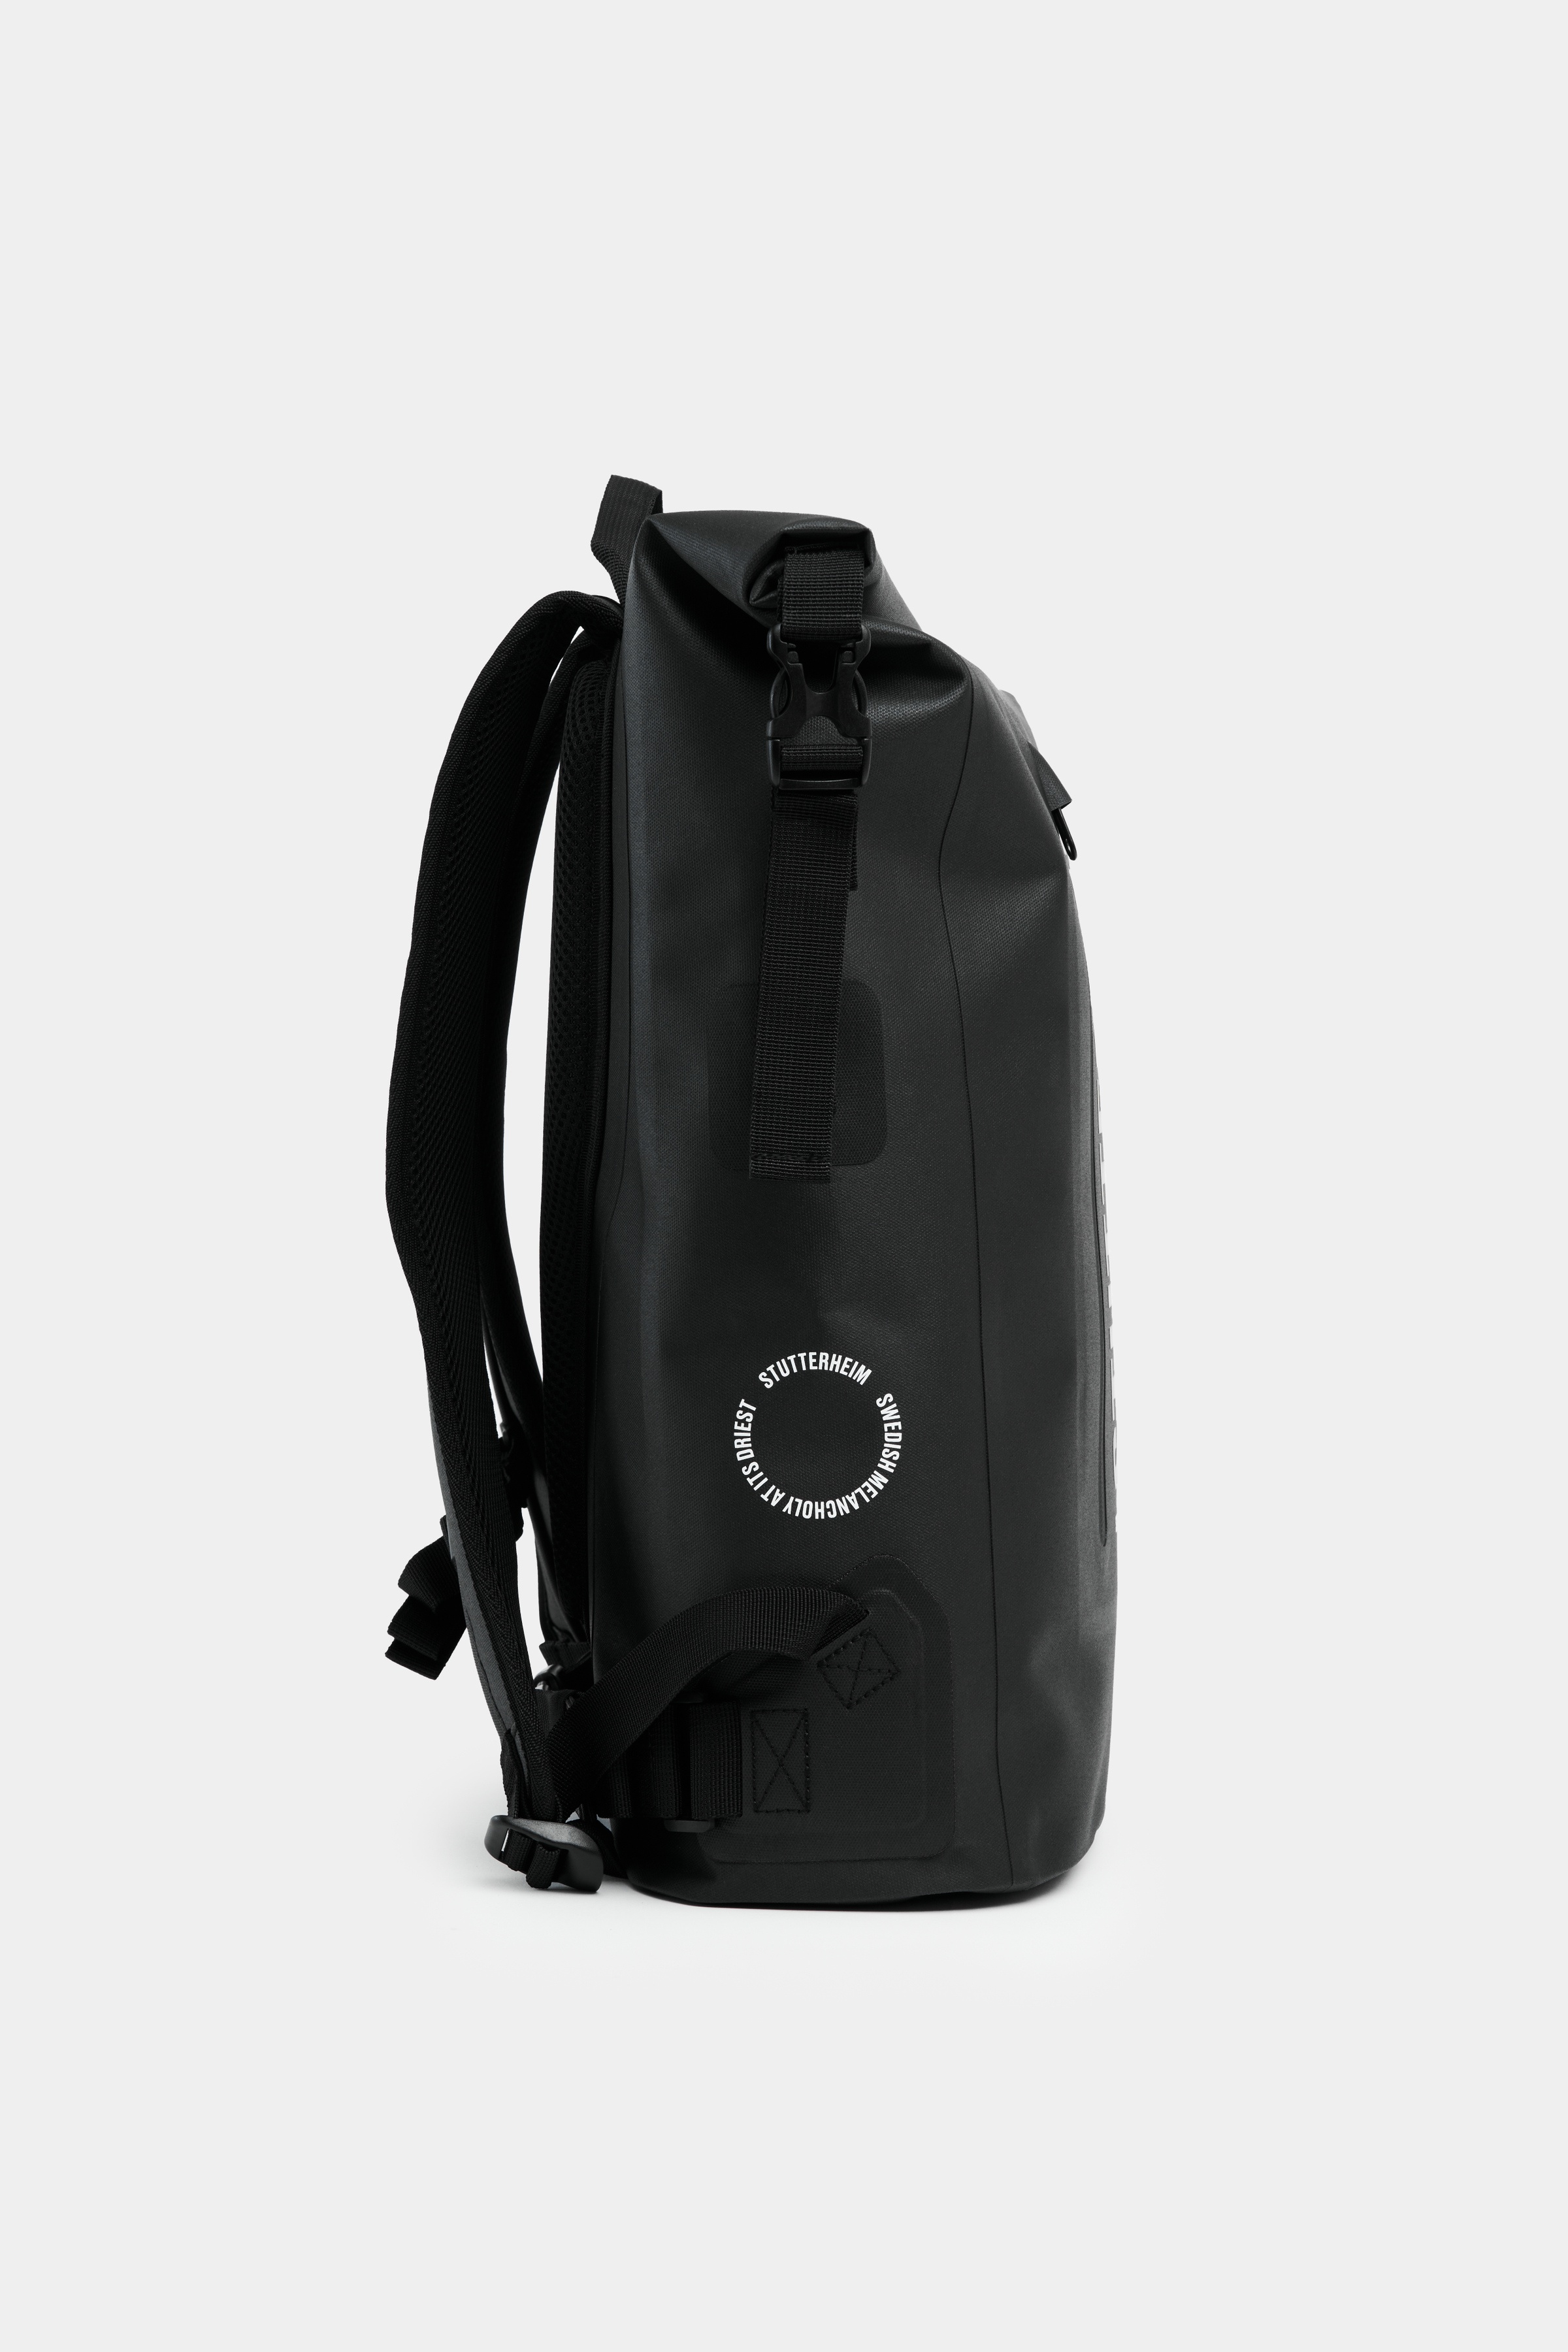 Rain Rolltop 25L Backpack Black - 2